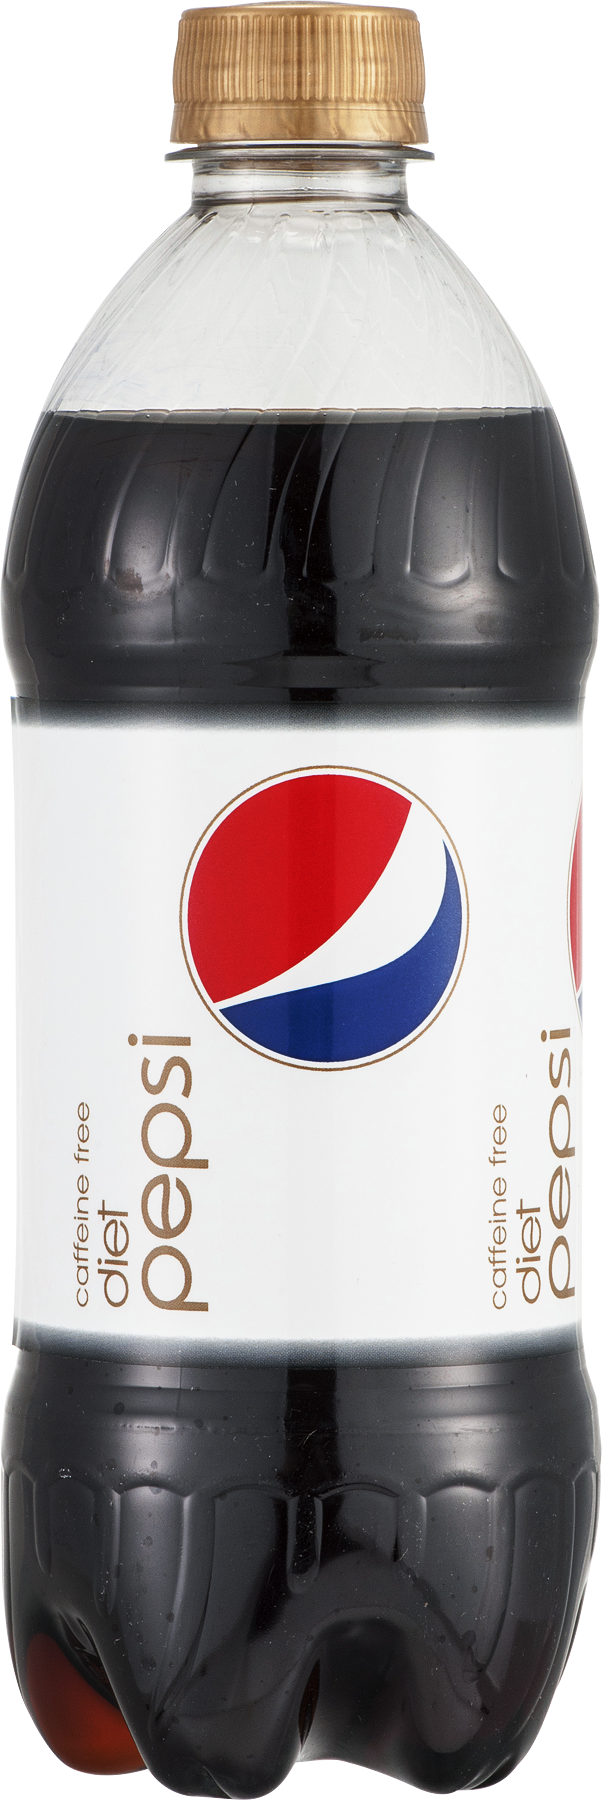 Caffeine Free Pepsi Bottle PNG image